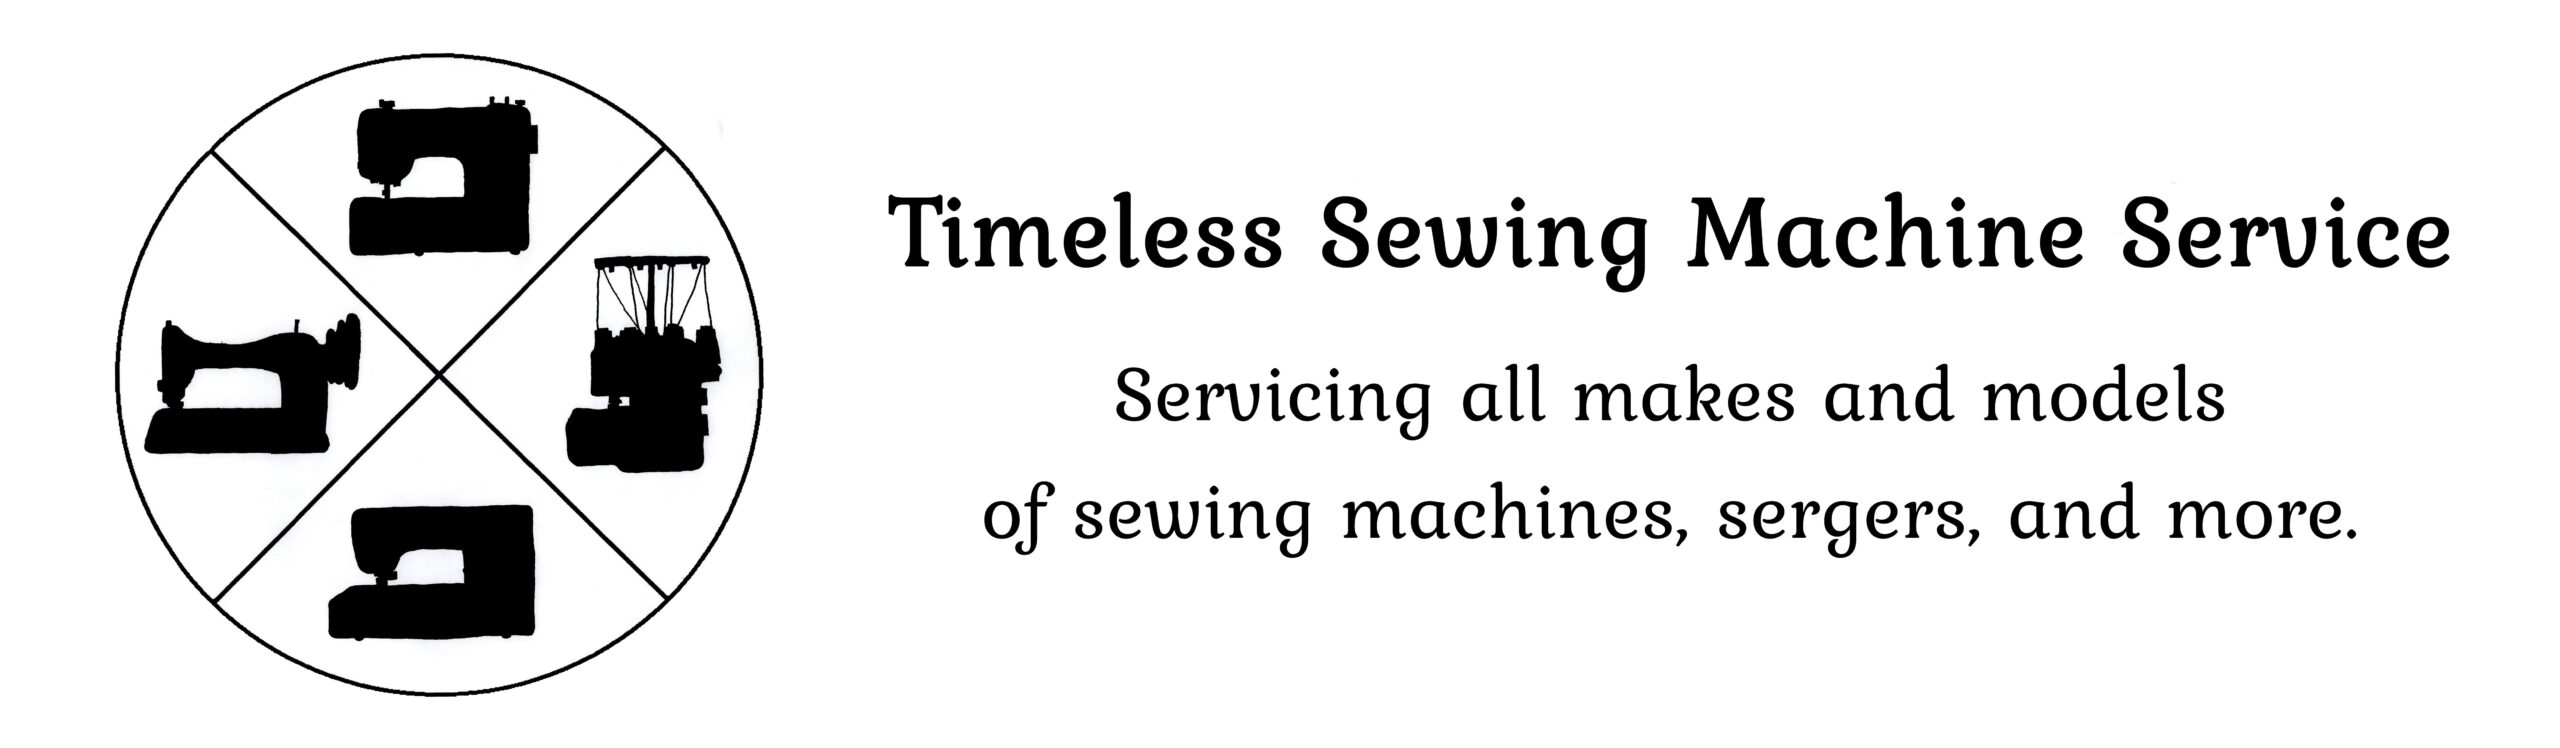 Timeless Sewing Machine Service